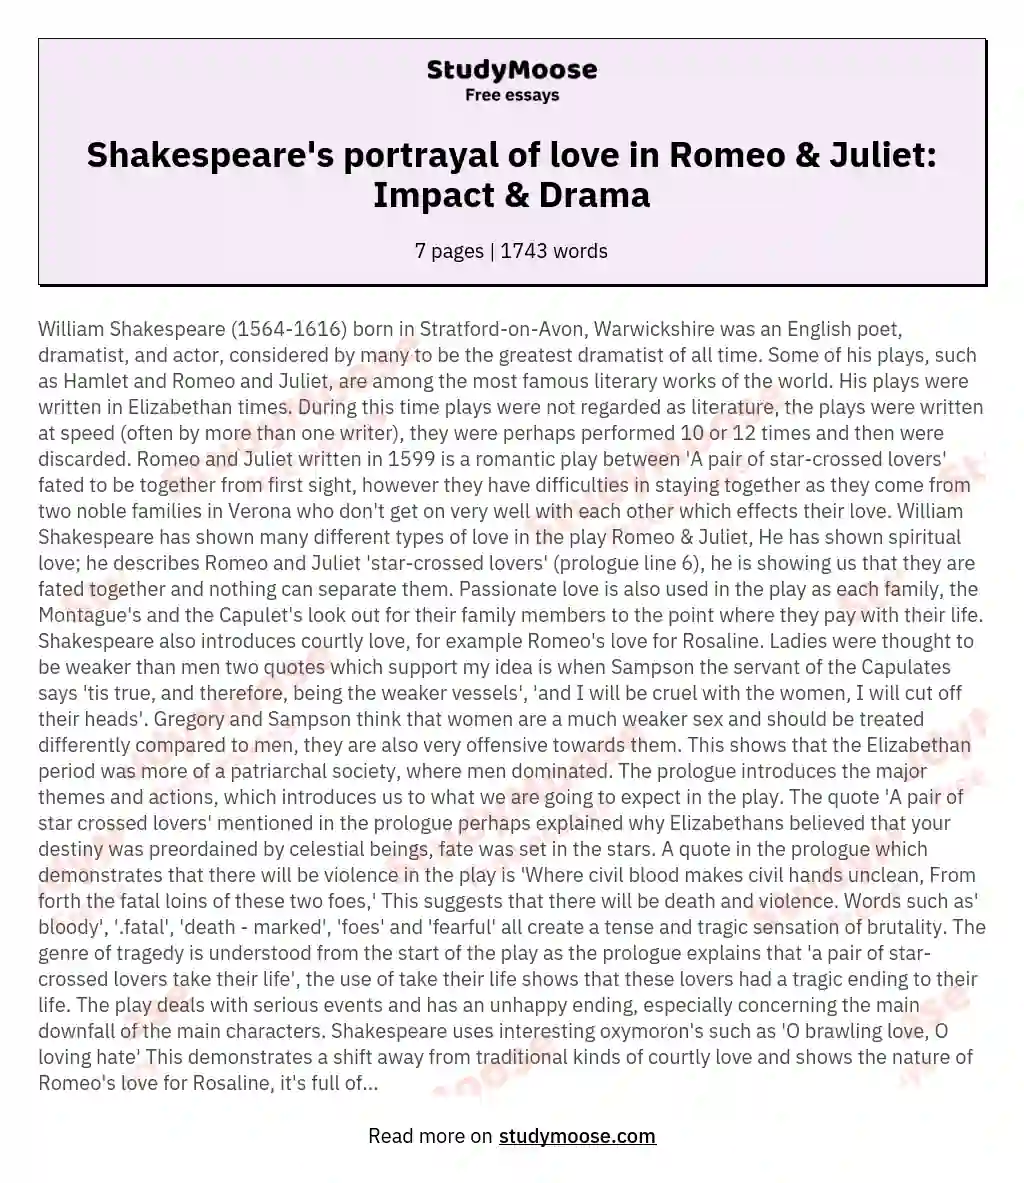 Shakespeare's portrayal of love in Romeo & Juliet: Impact & Drama essay